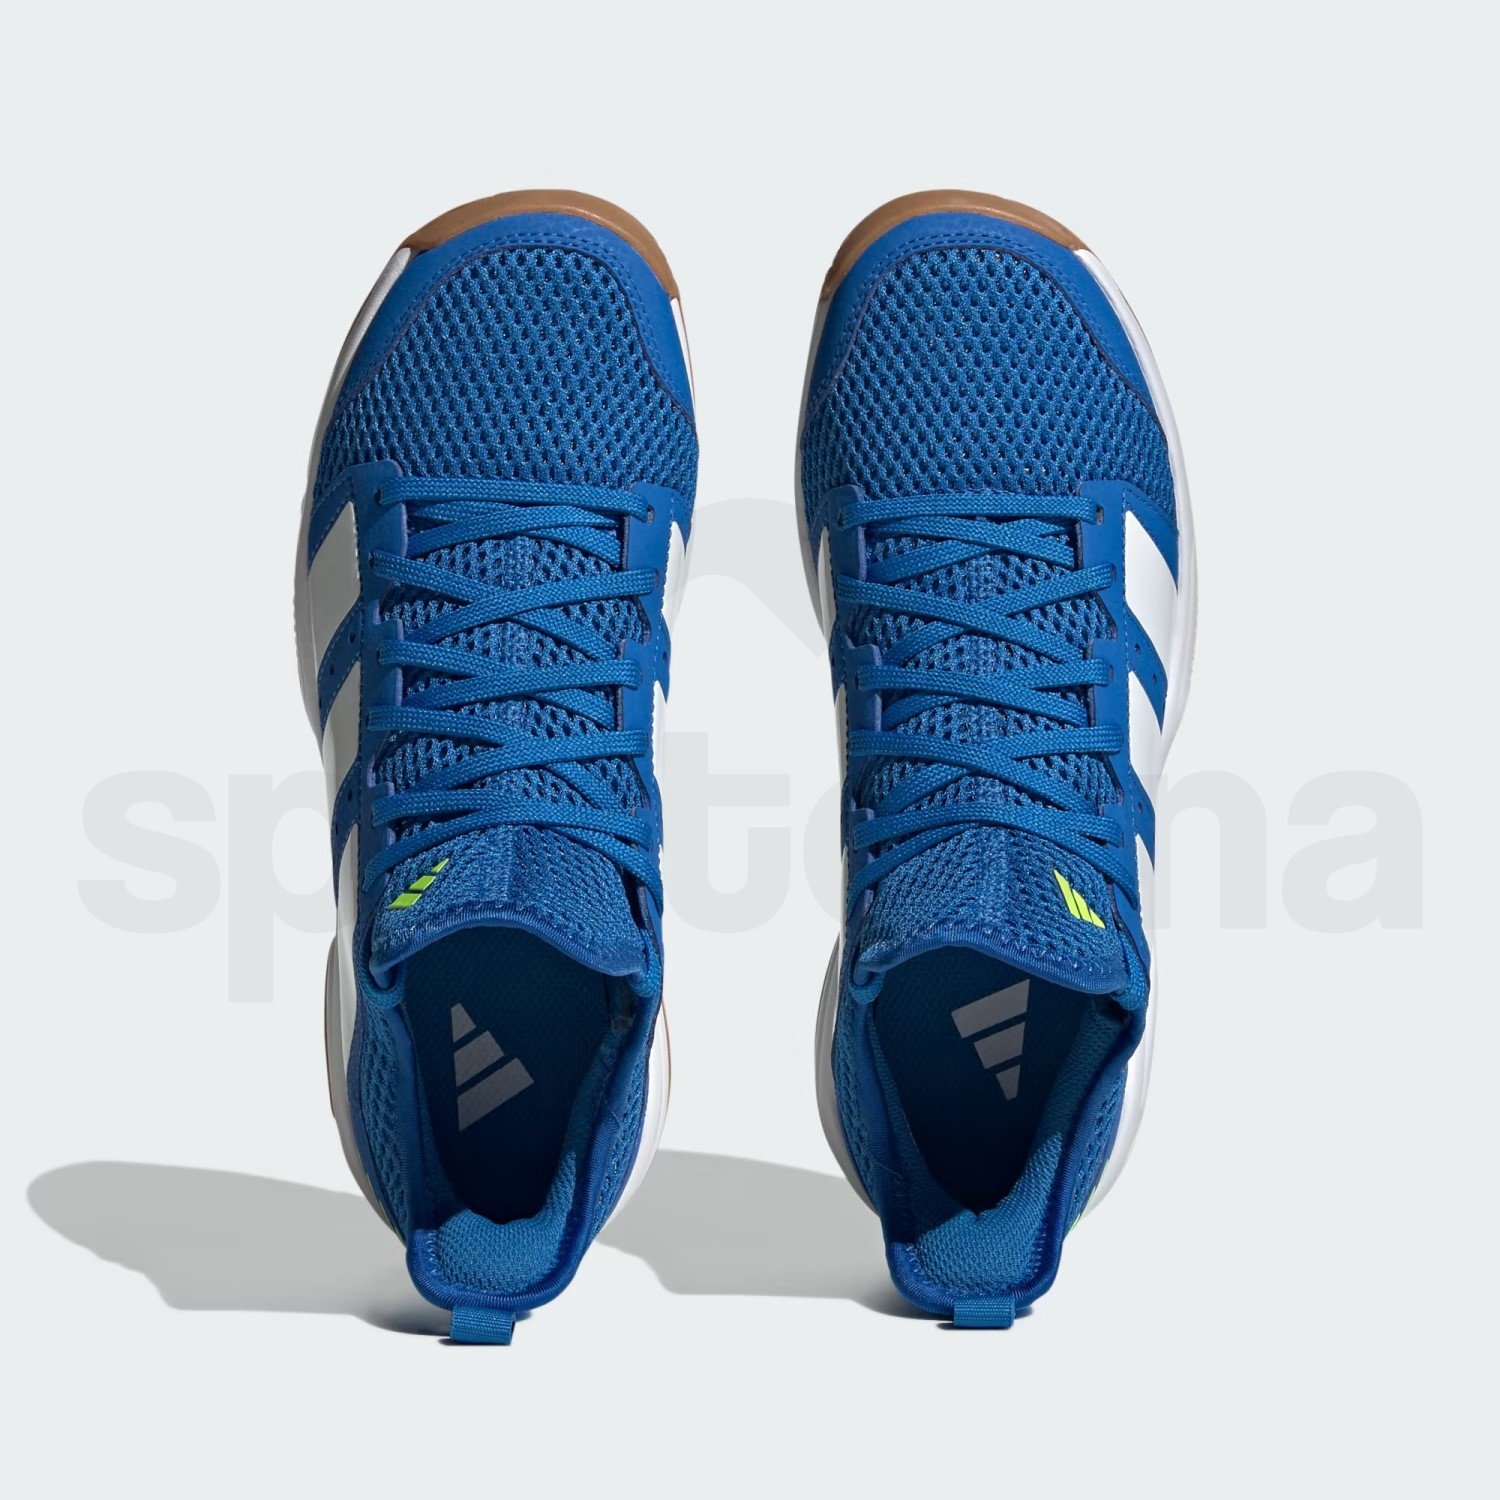 Obuv Adidas Stabil J - modrá/bílá/zelená